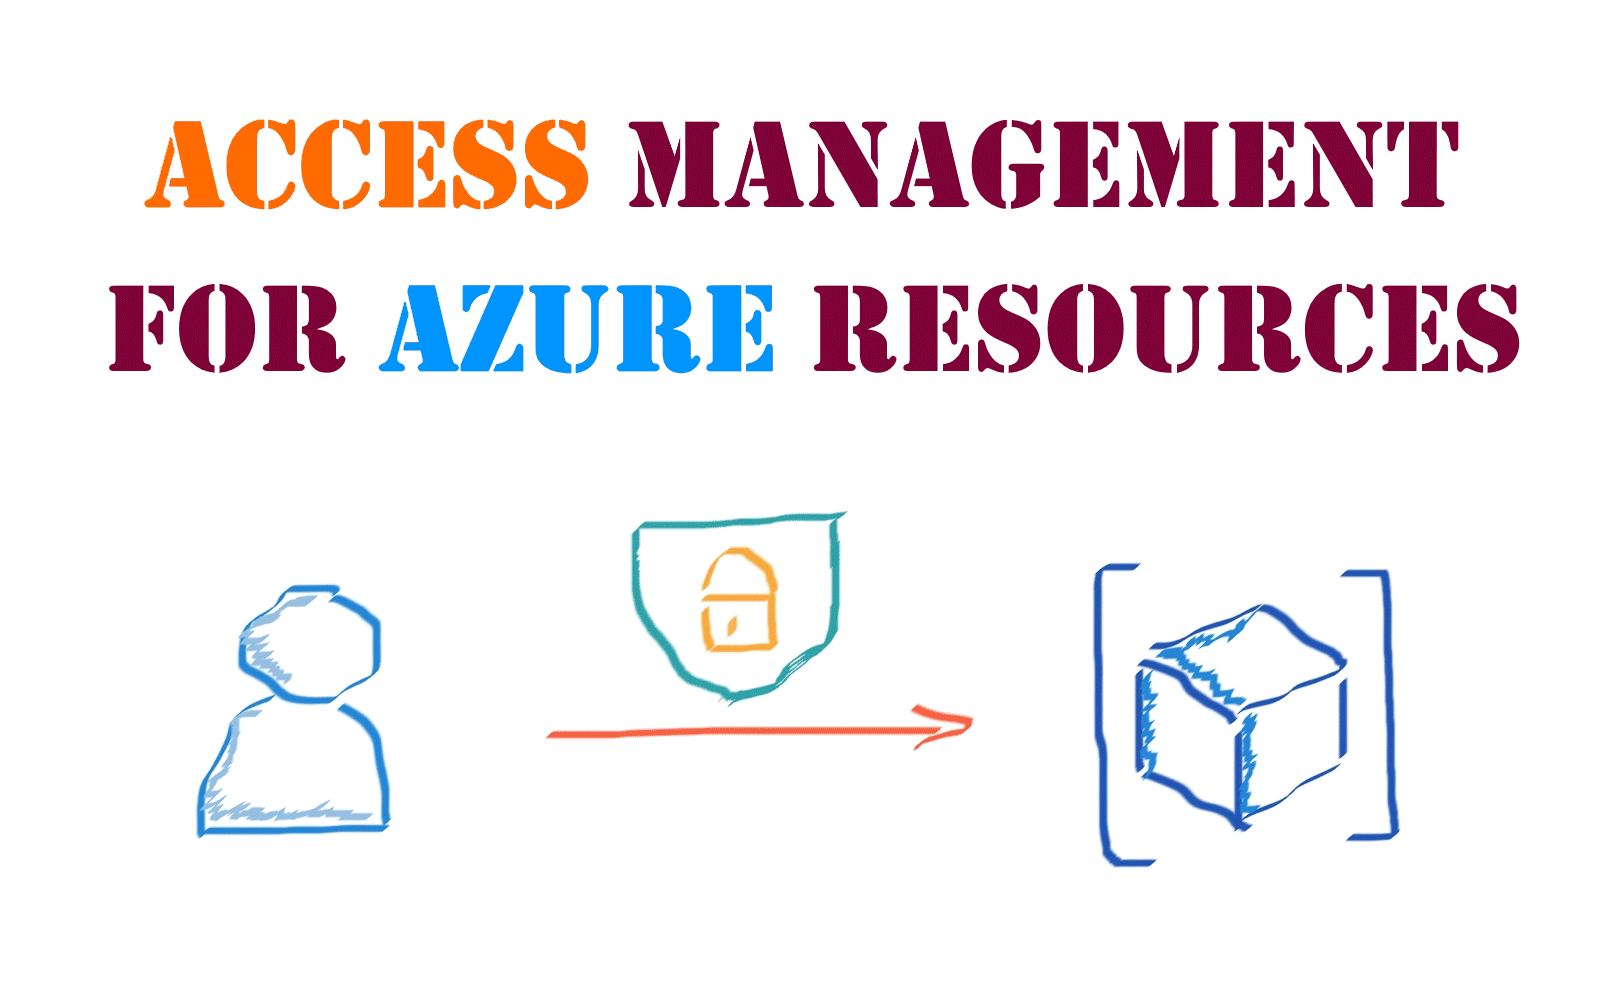 Design the access management process for Azure resources